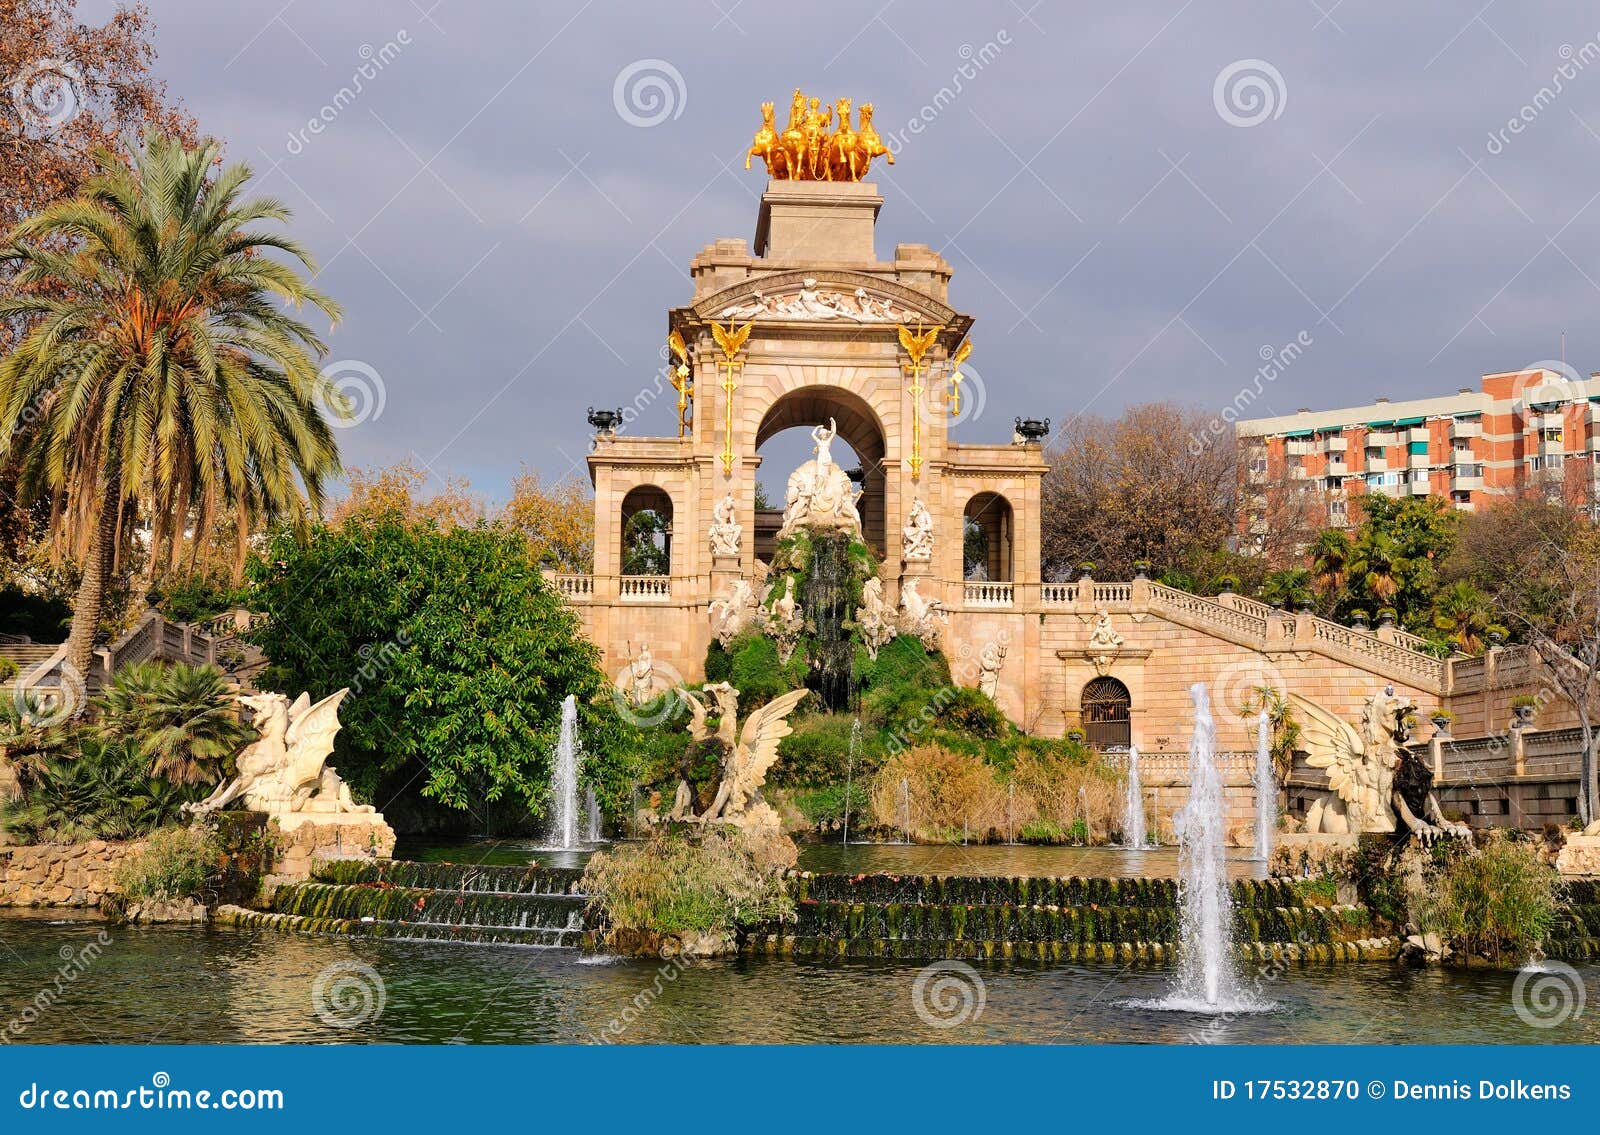 fountain in parc de la ciutadella, barcelona